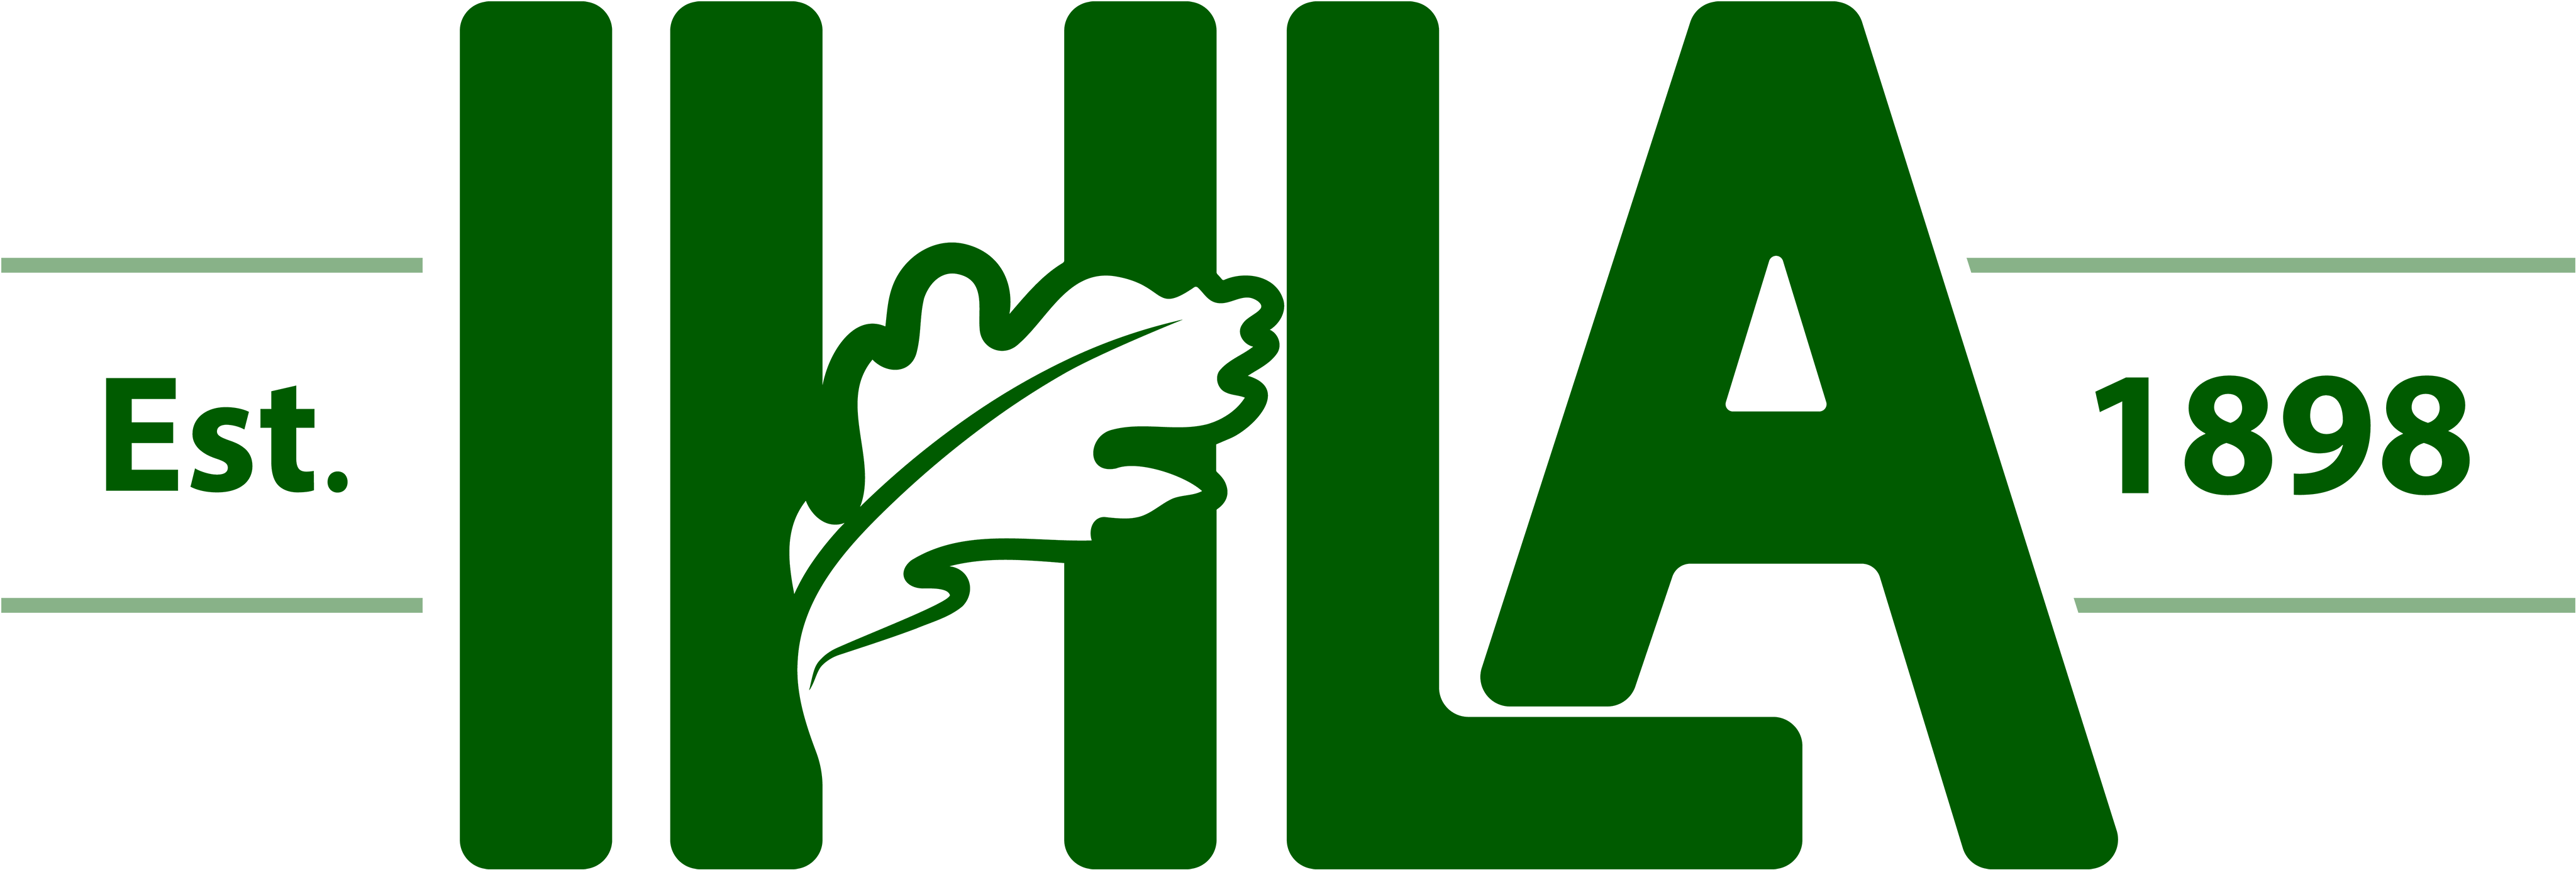 Indiana Hardwood Lumbermans Association Logo